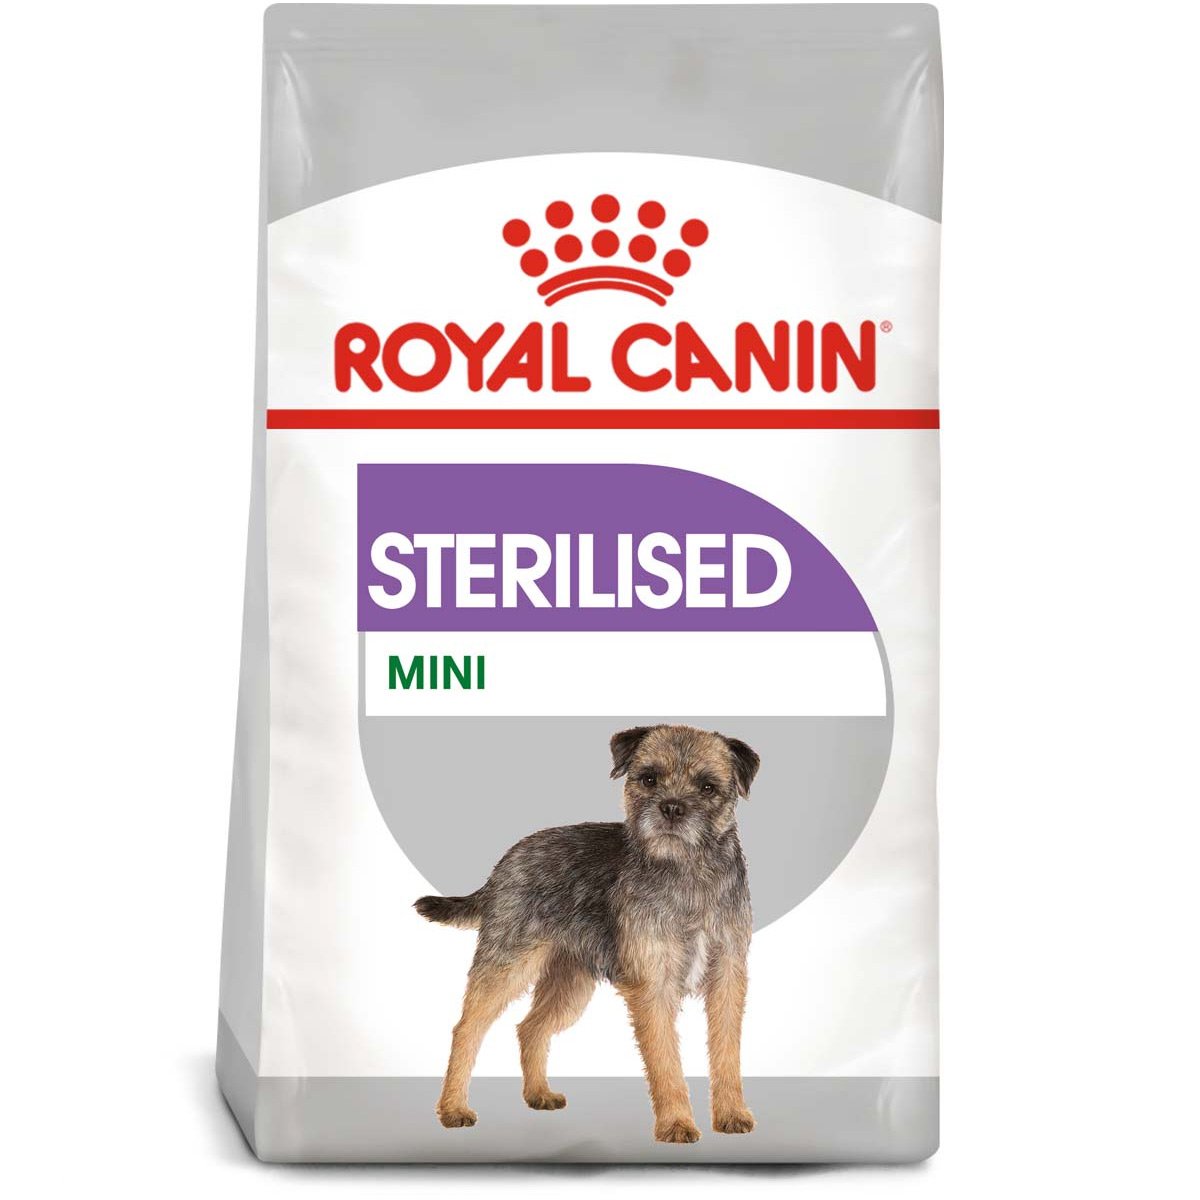 ROYAL CANIN STERILISED MINI Trockenfutter für kastrierte kleine Hunde 8kg von Royal Canin